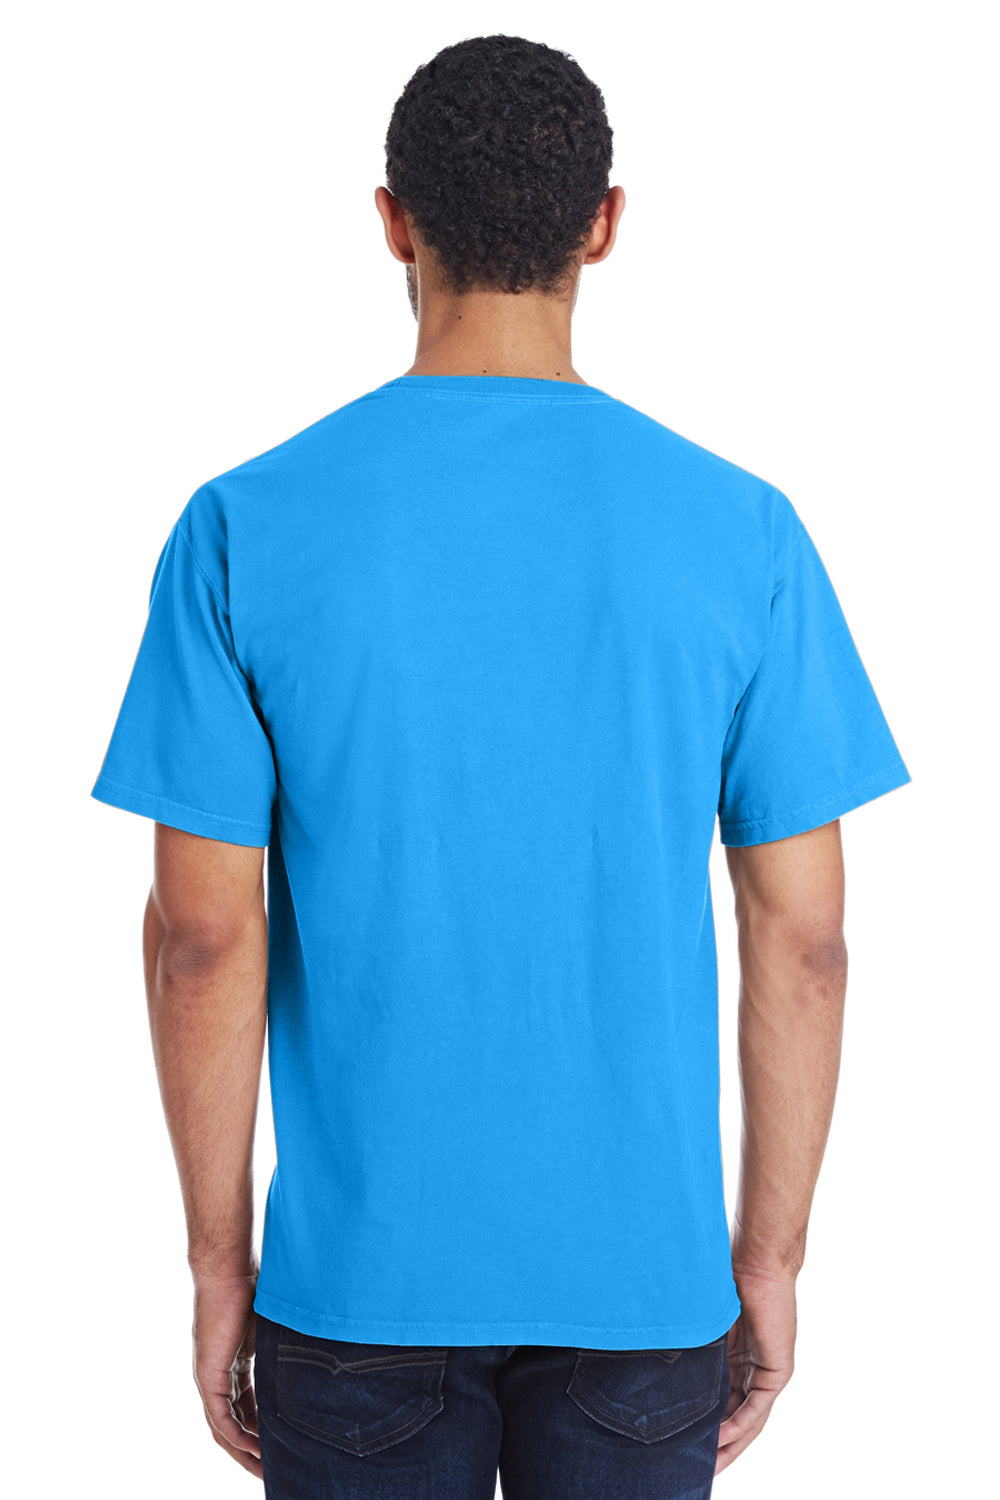 ComfortWash By Hanes GDH100 Mens Short Sleeve Crewneck T-Shirt Sky Blue Back